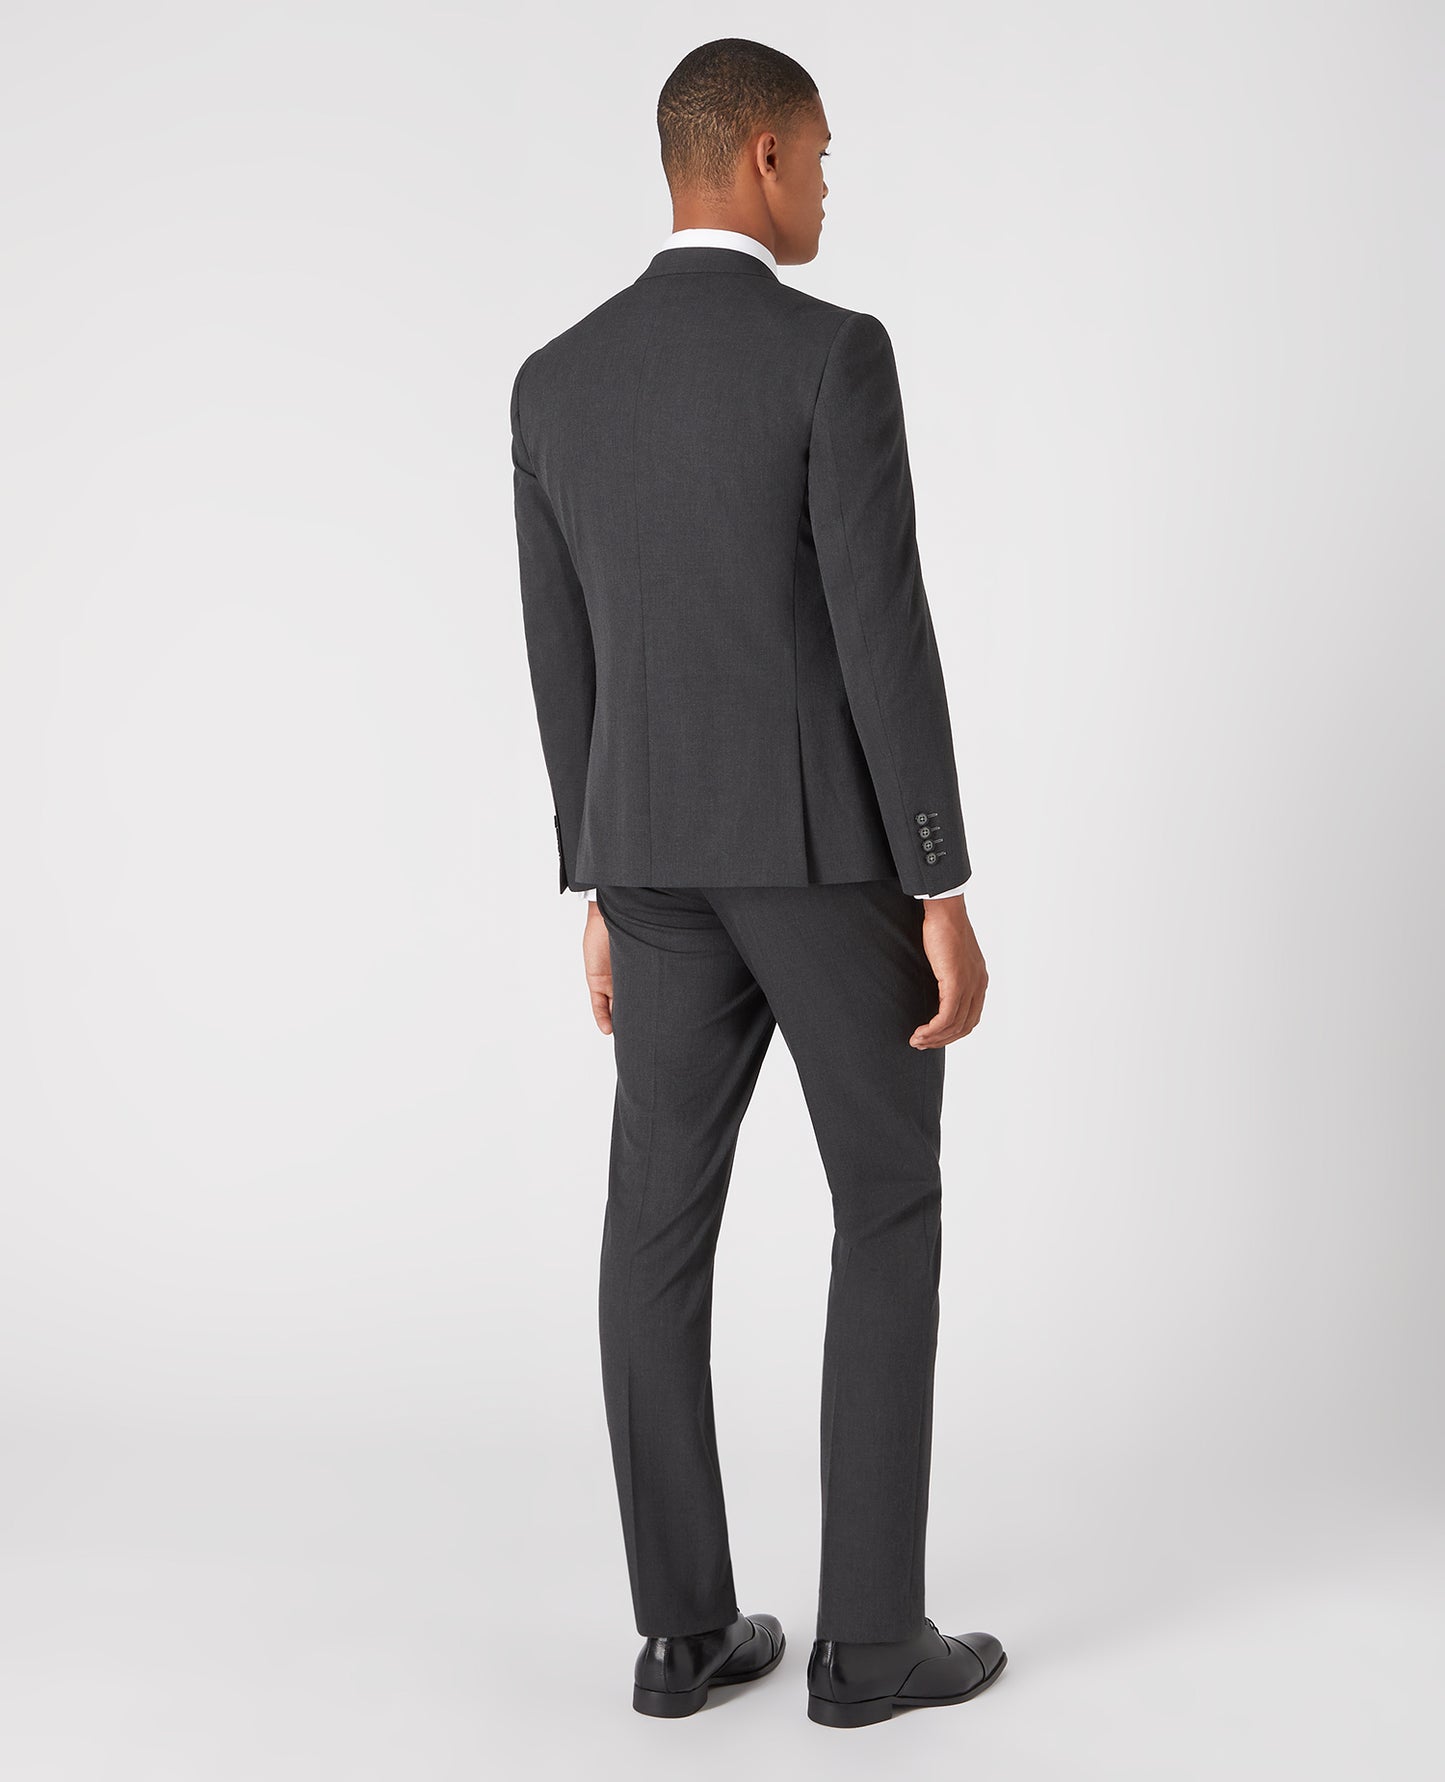 Slim Fit Polyviscose Suit Jacket - Charcoal